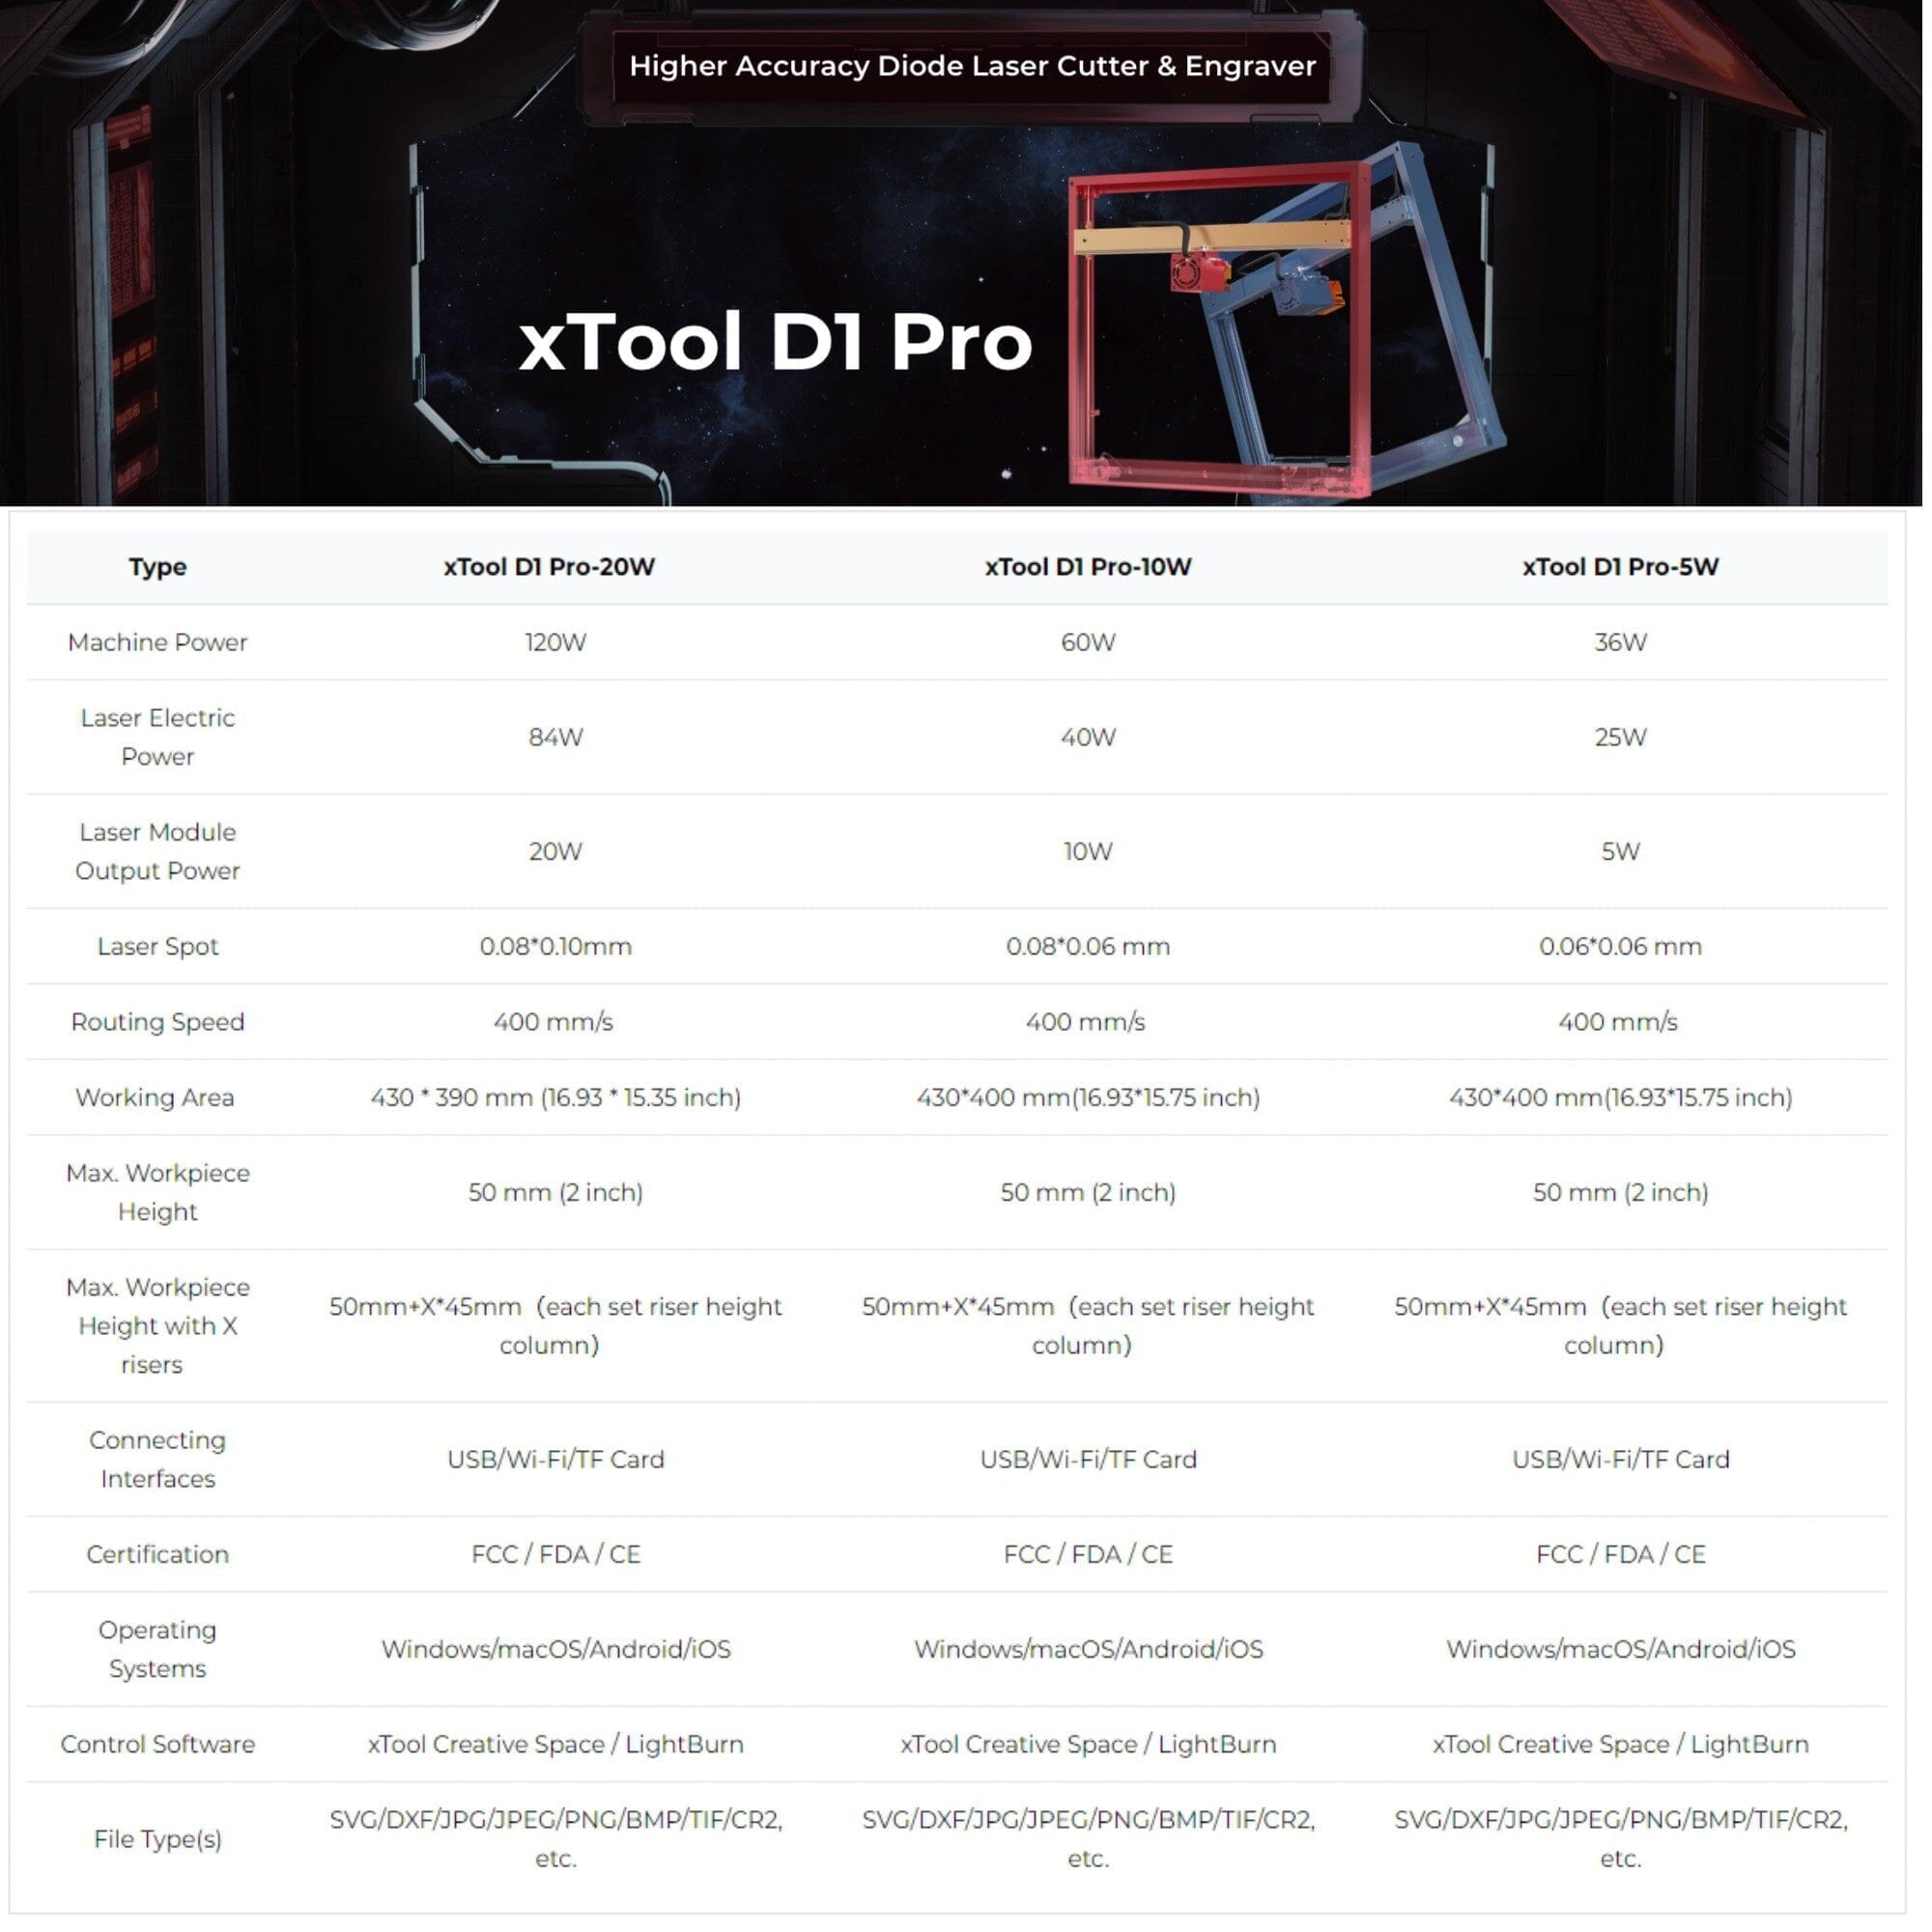 xTool M1 10W Craft Laser & Blade Cutting Machine Rotary Bundle